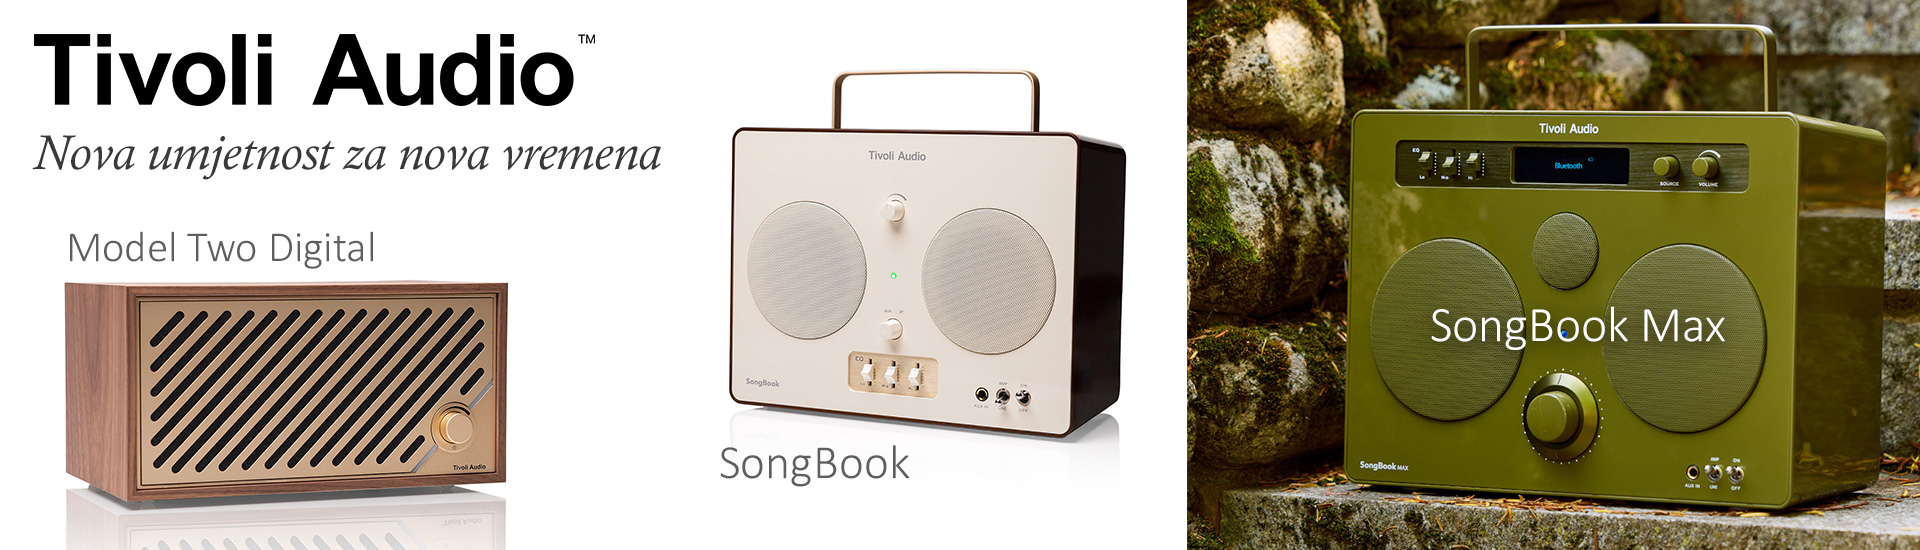 Tivoli Audio Model Two Digital, SongBook i SongBook Max